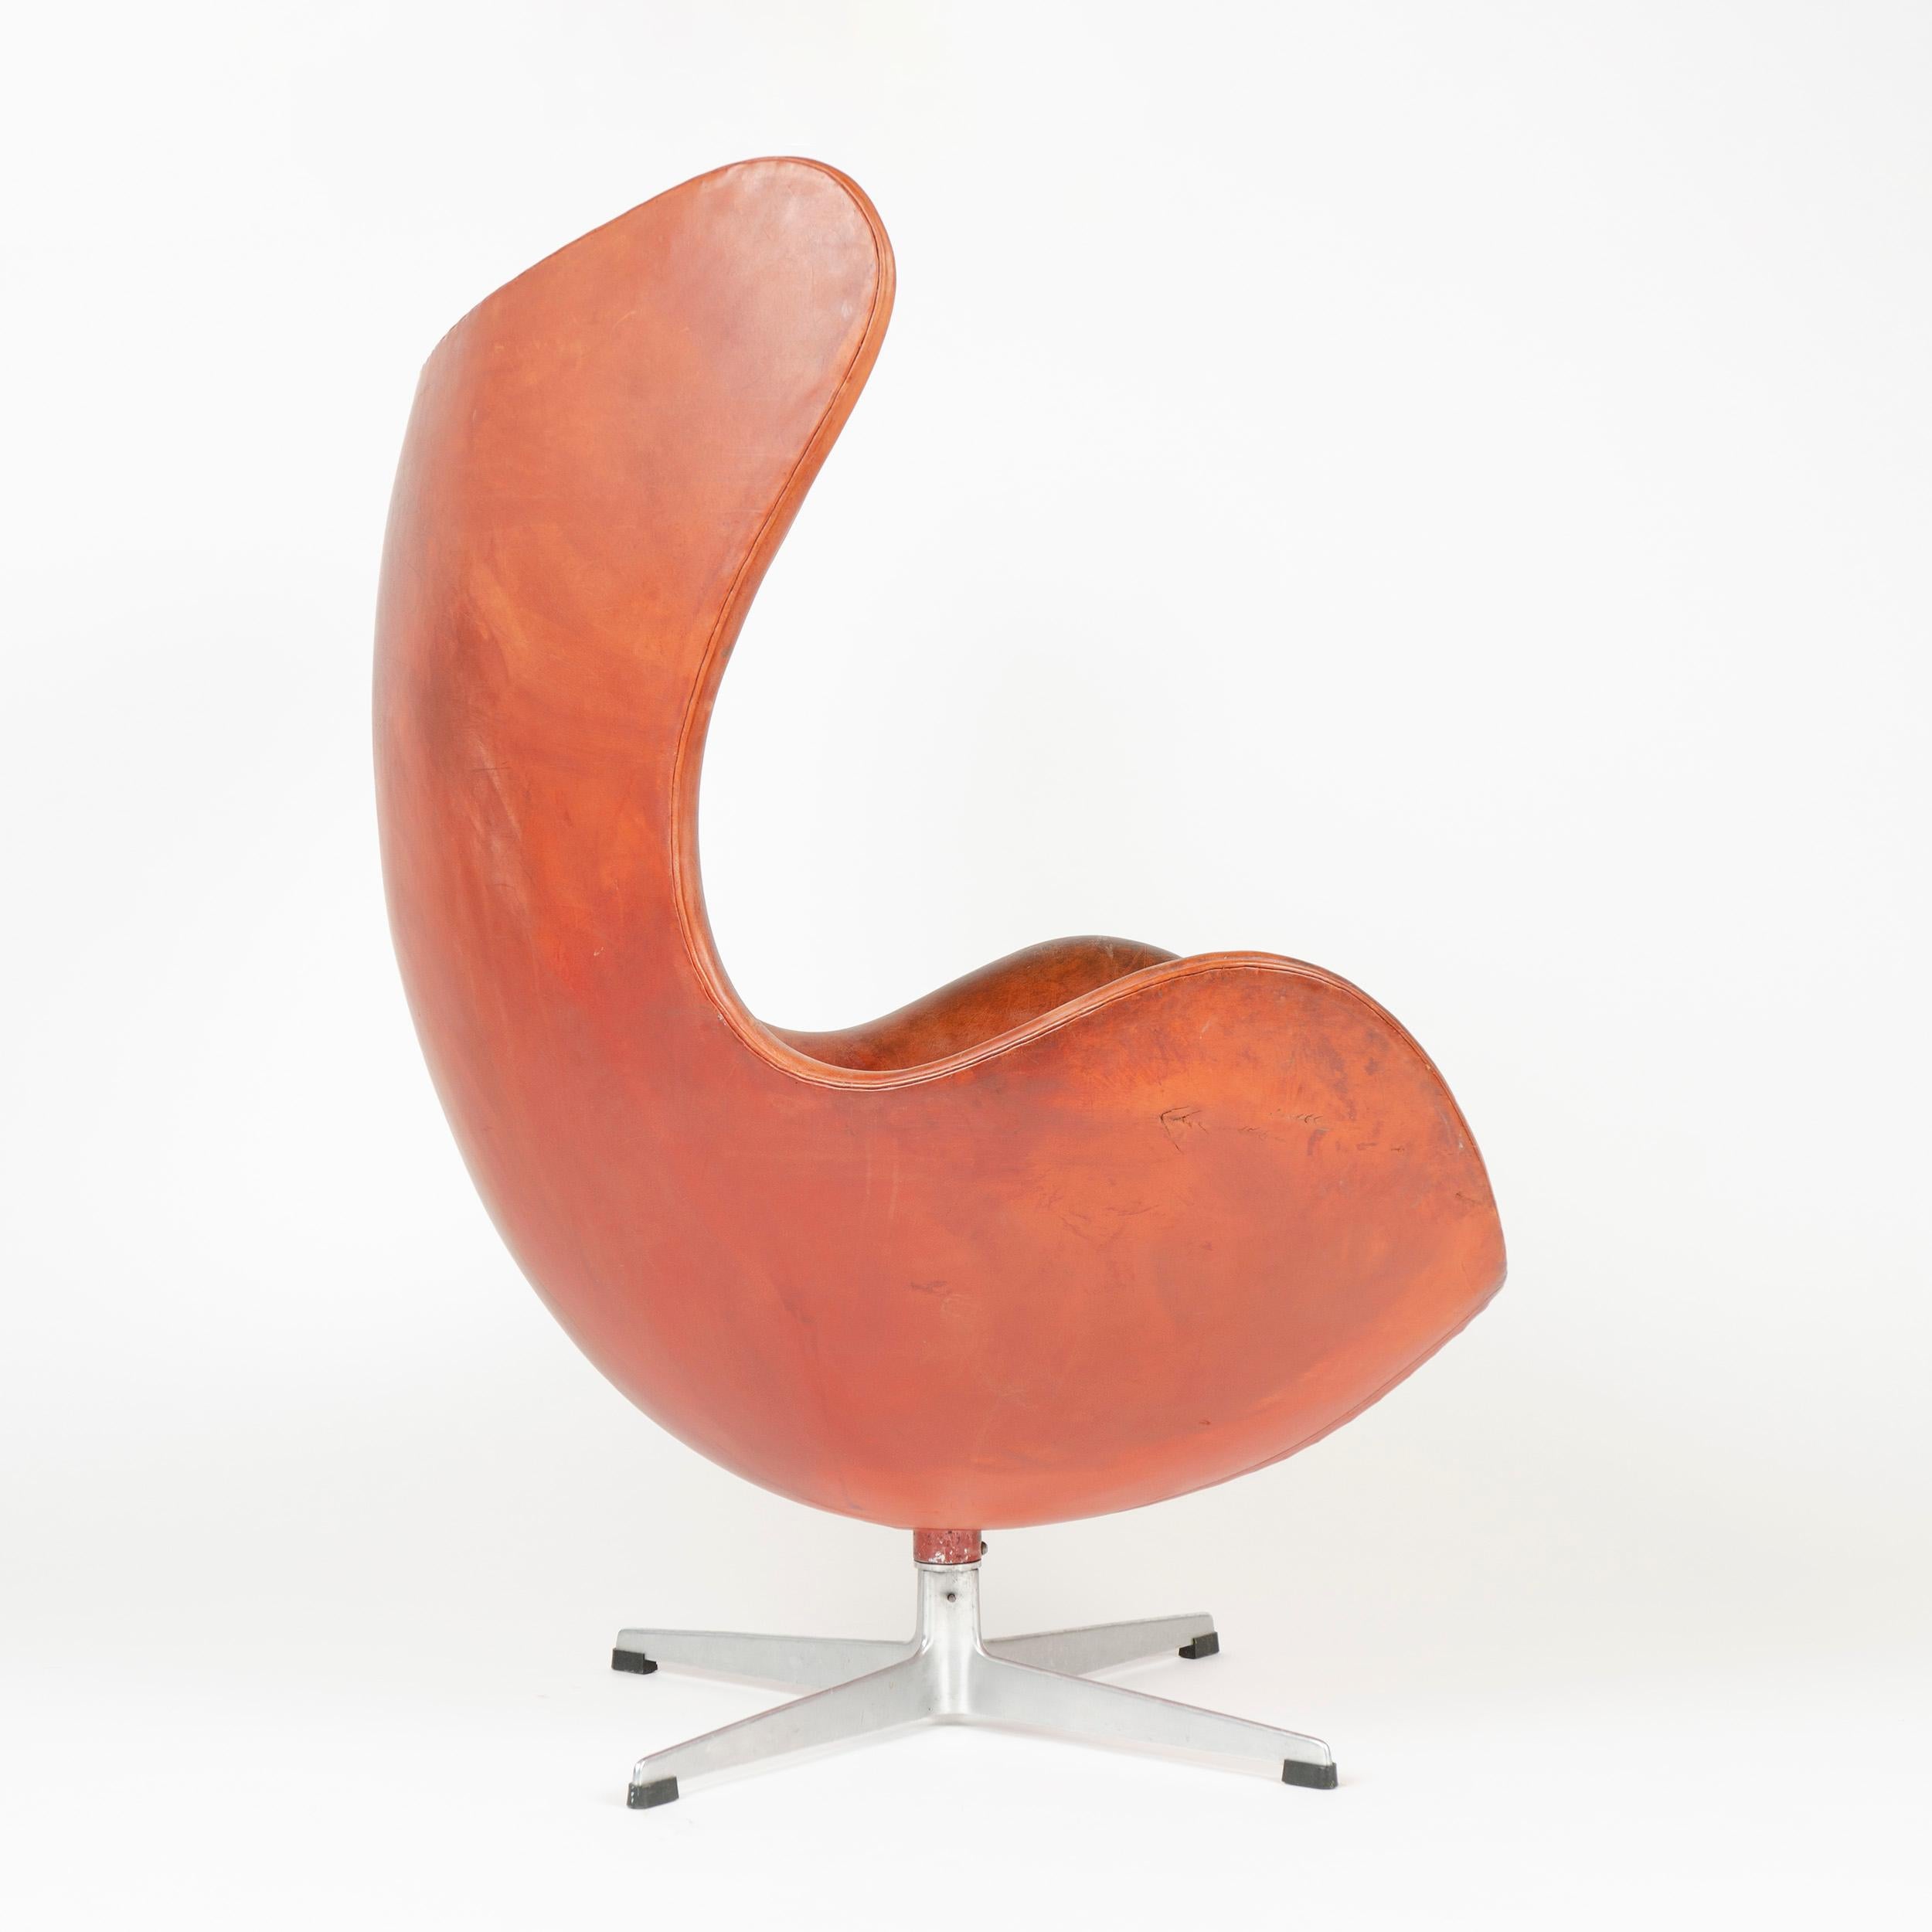 Danish 1950s Scandinavian Modern Lounge Chair by Arne Jacobsen for Fritz Hansen